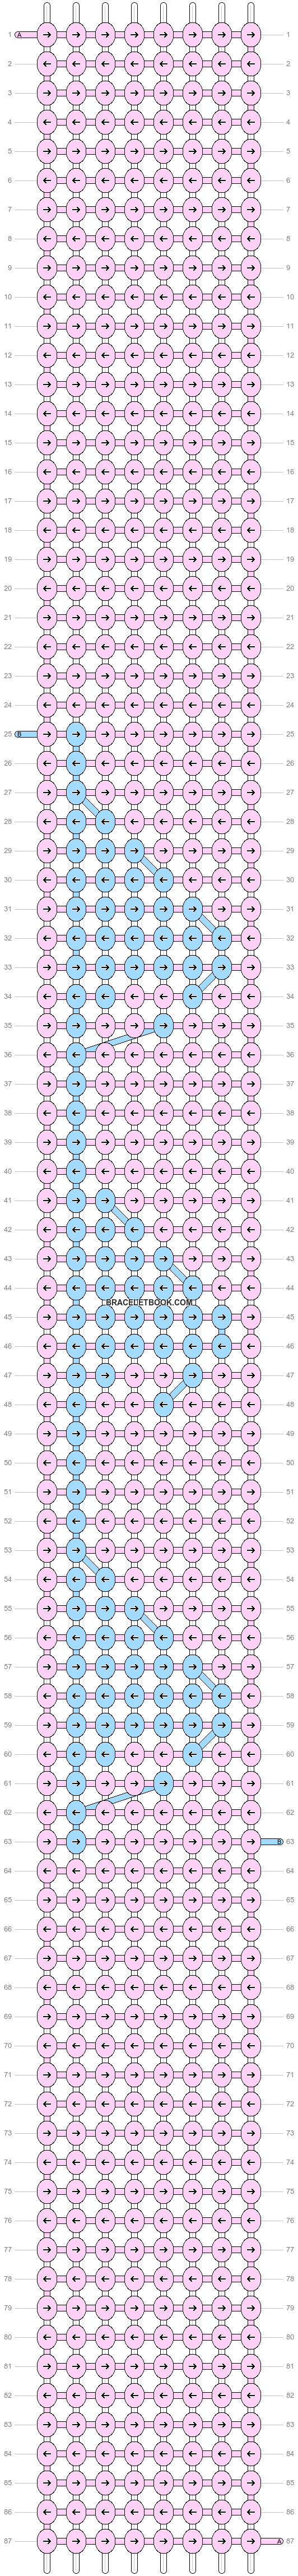 Alpha pattern #57530 variation #105135 pattern